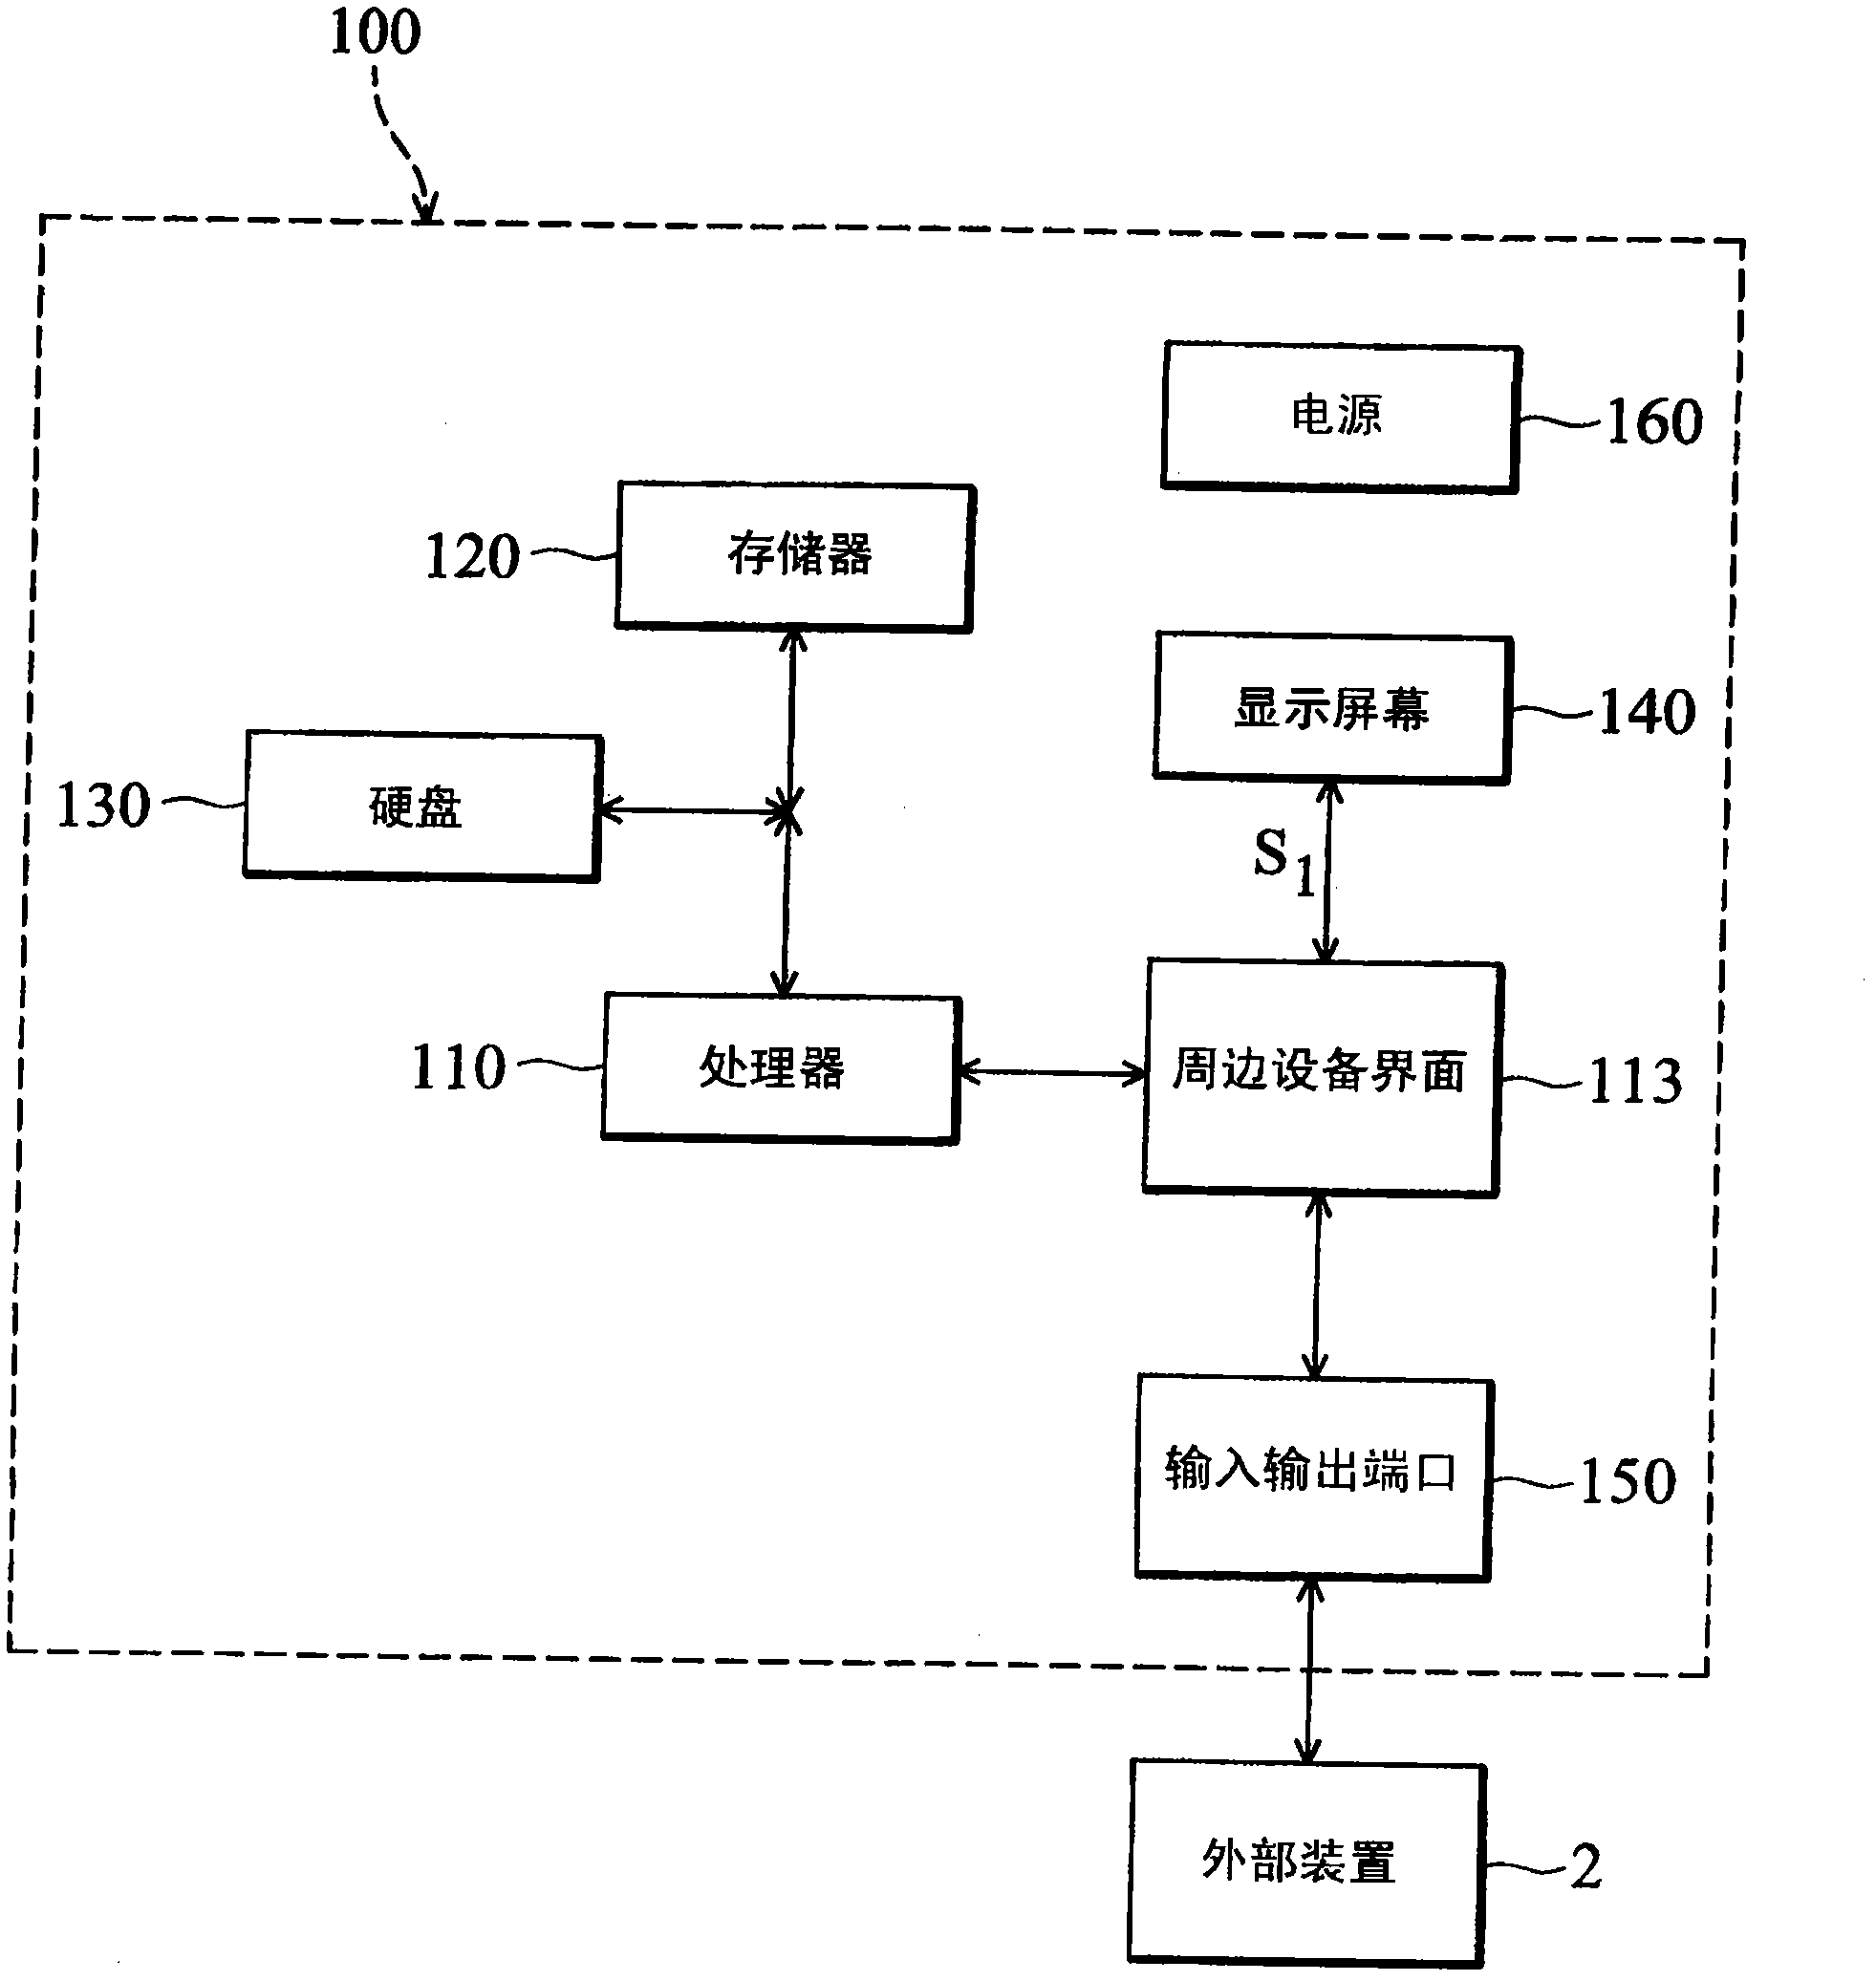 Computer integration system and computer integration method